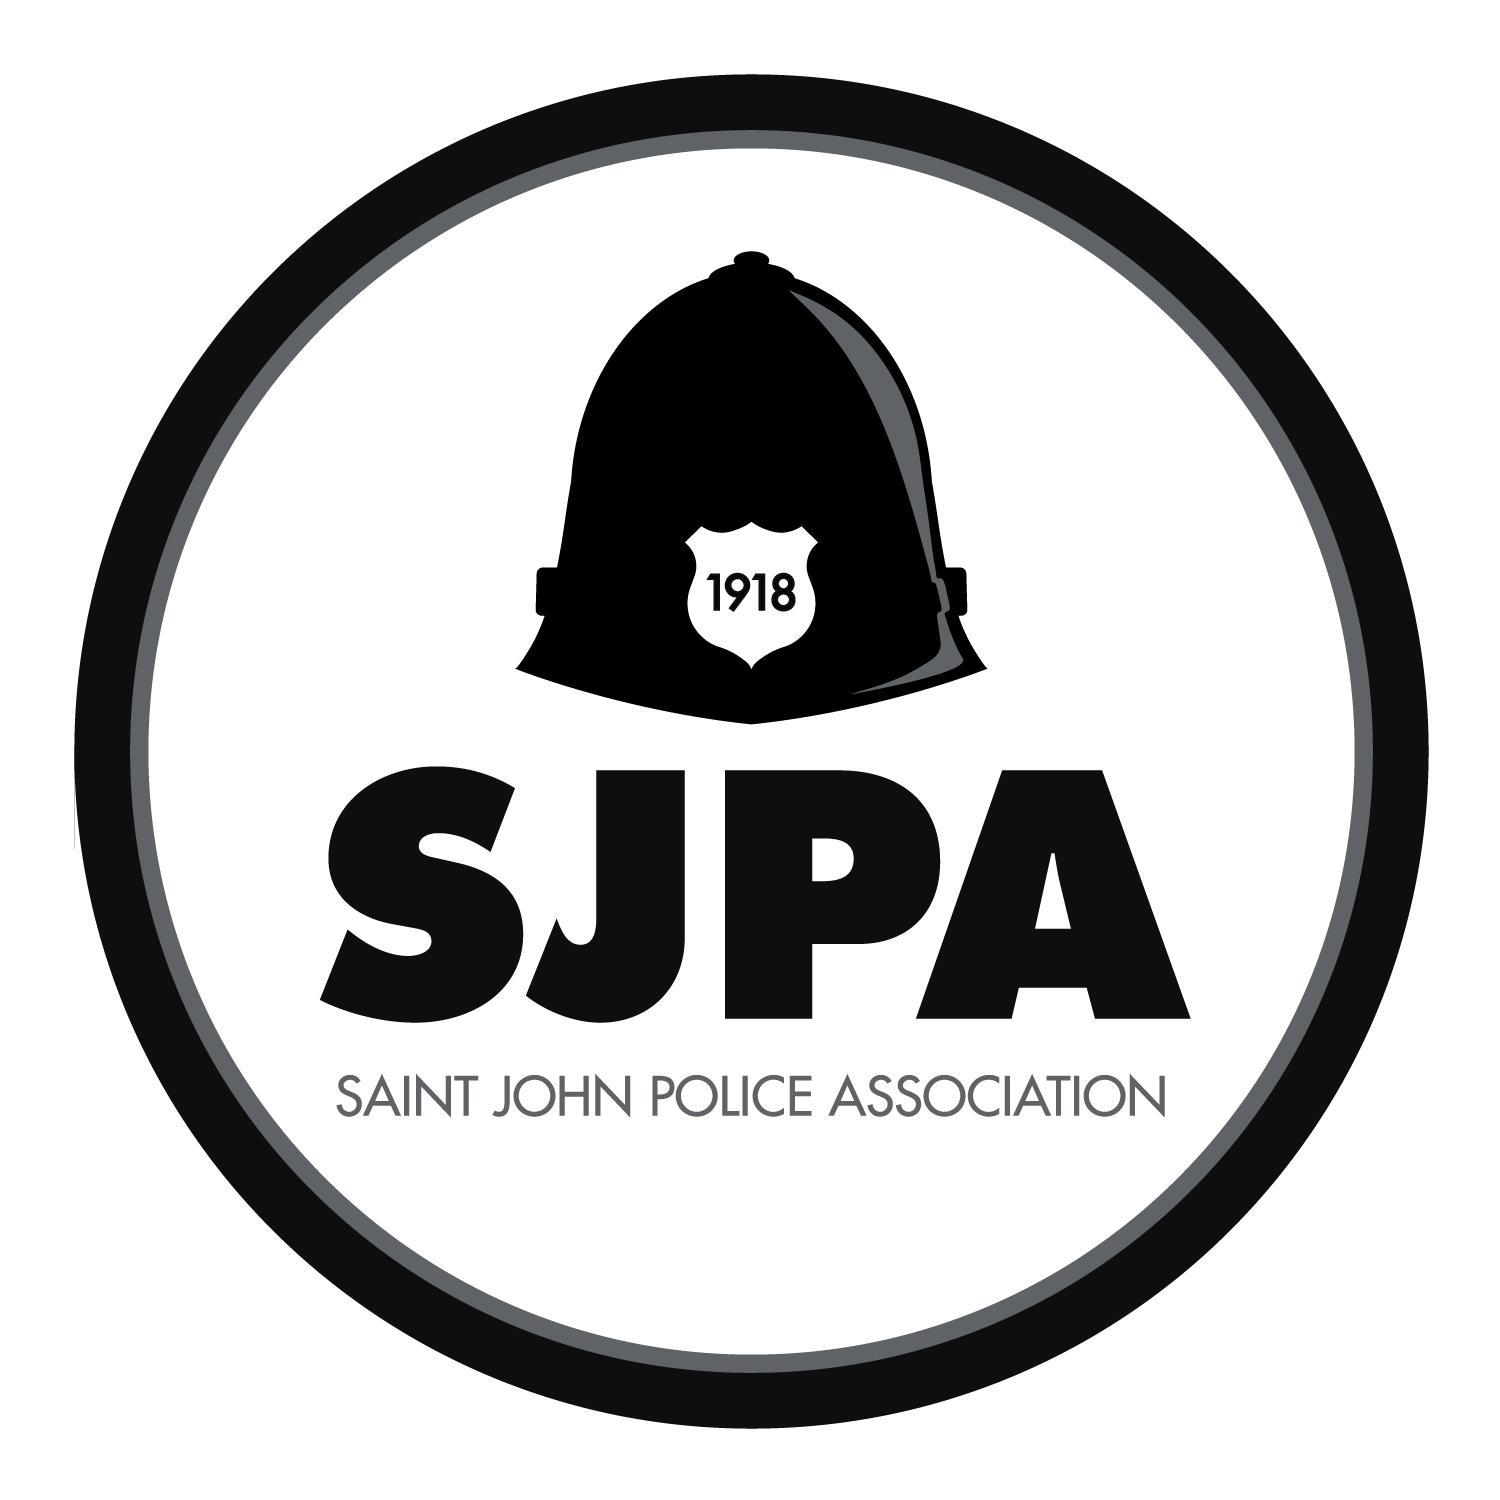 Saint John Police Association